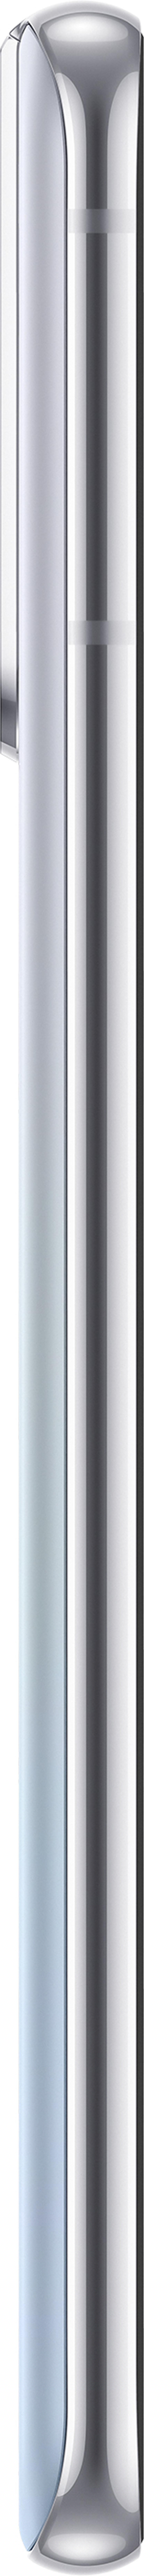 Samsung Galaxy S21+ 5G 256GB Dual-SIM Fantomsølv